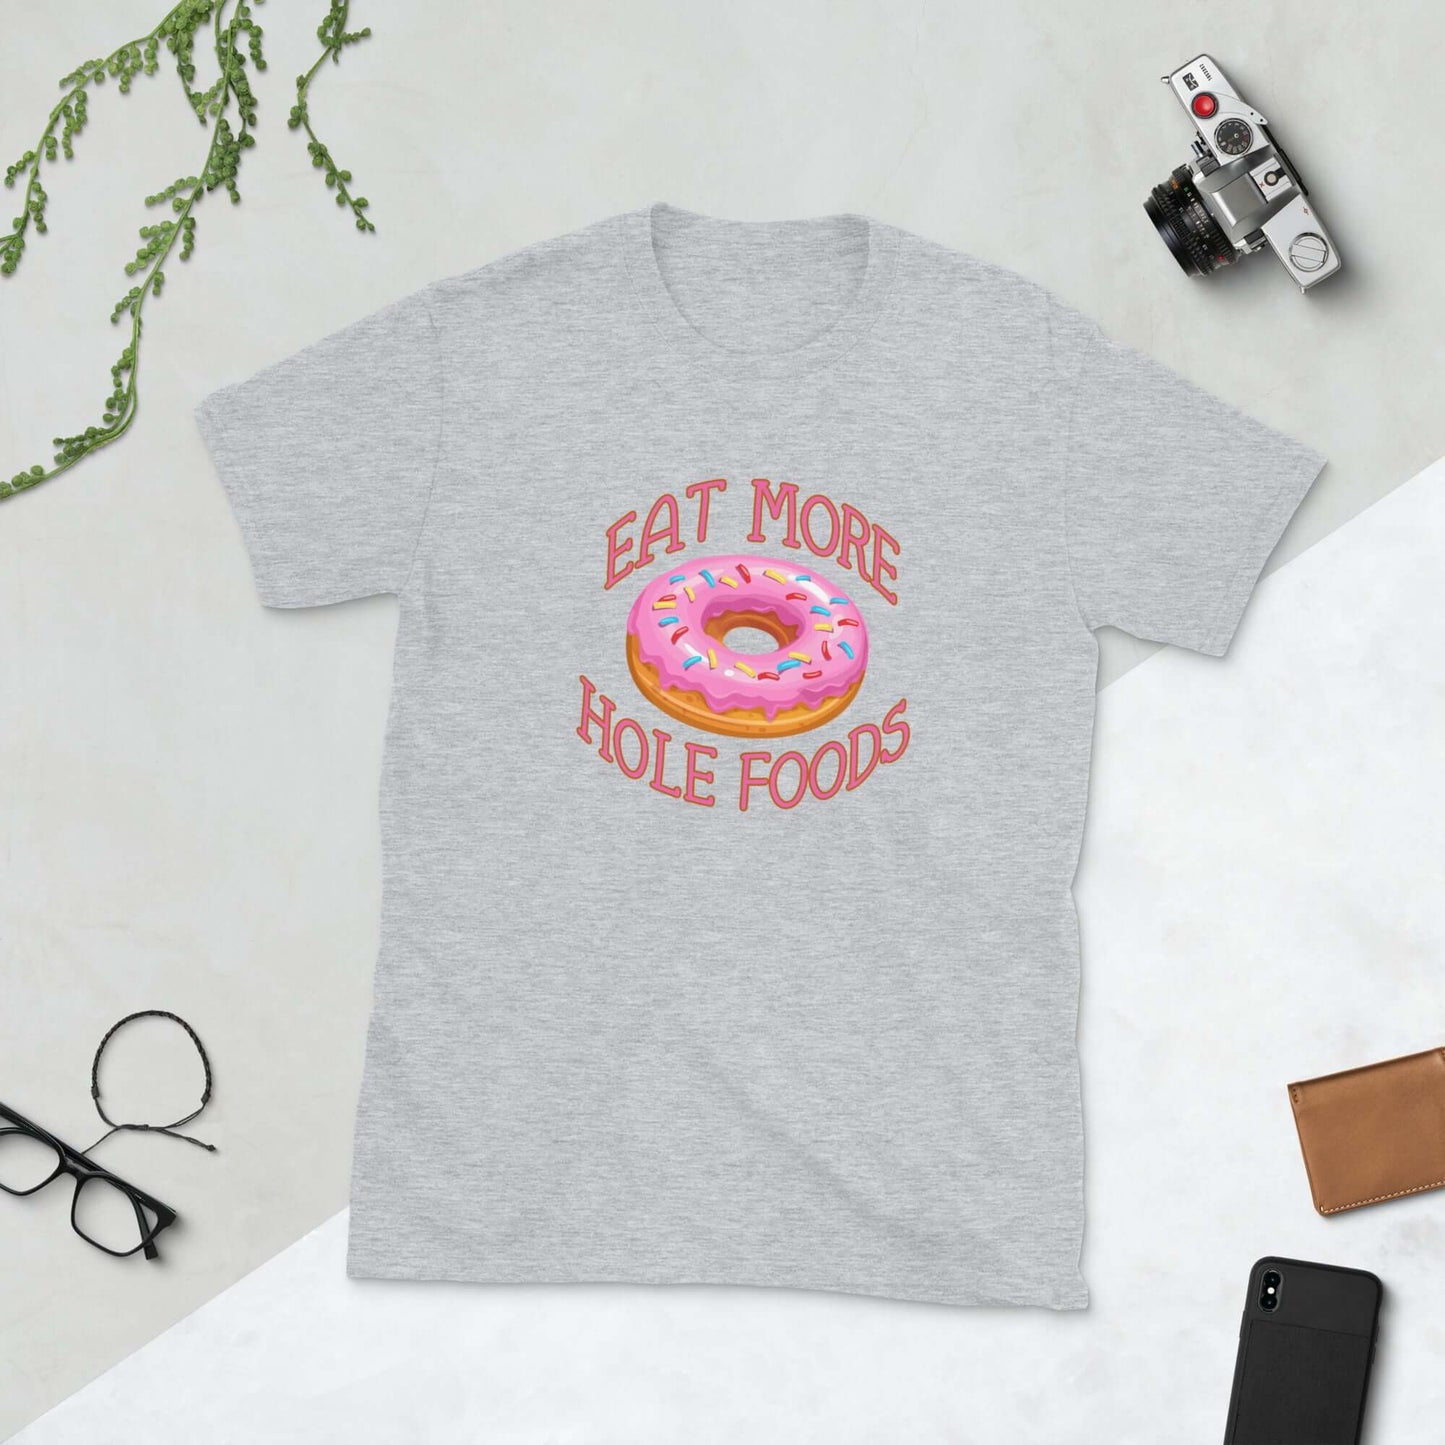 Eat more hole foods donut food pun t-shirt